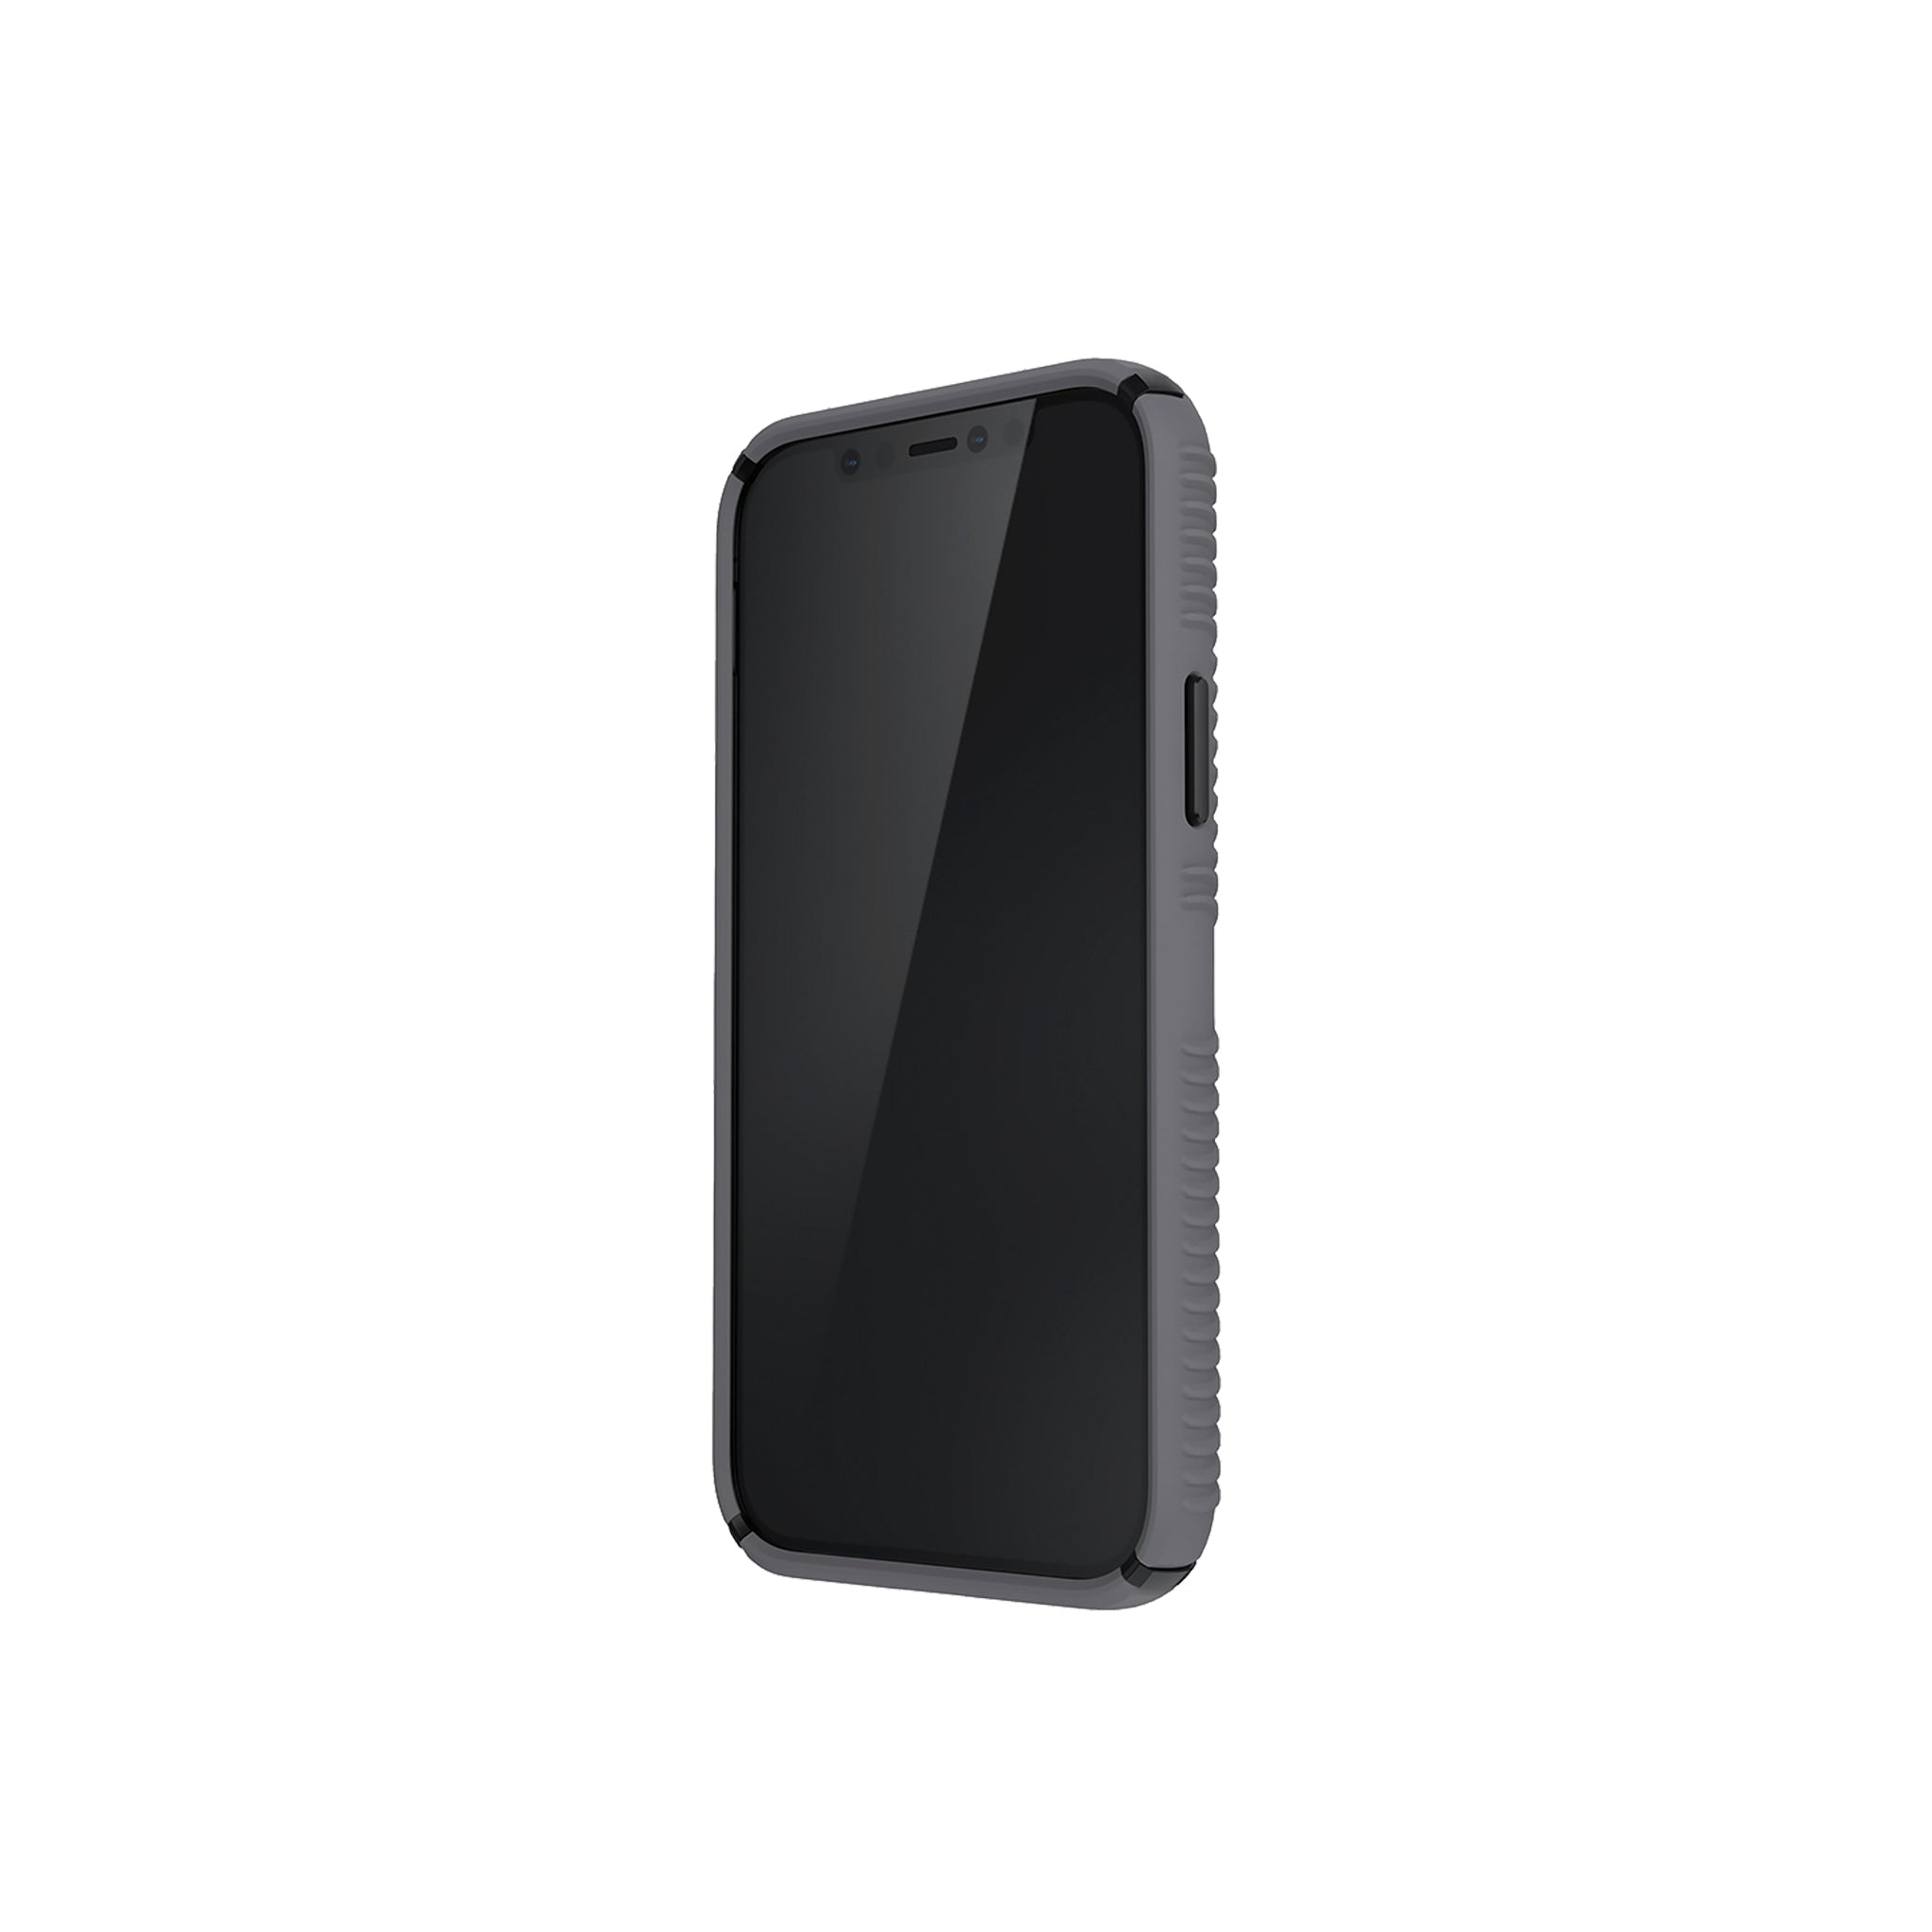 Speck - Presidio2 Grip Case For Apple Iphone 12 / 12 Pro - Graphite Grey